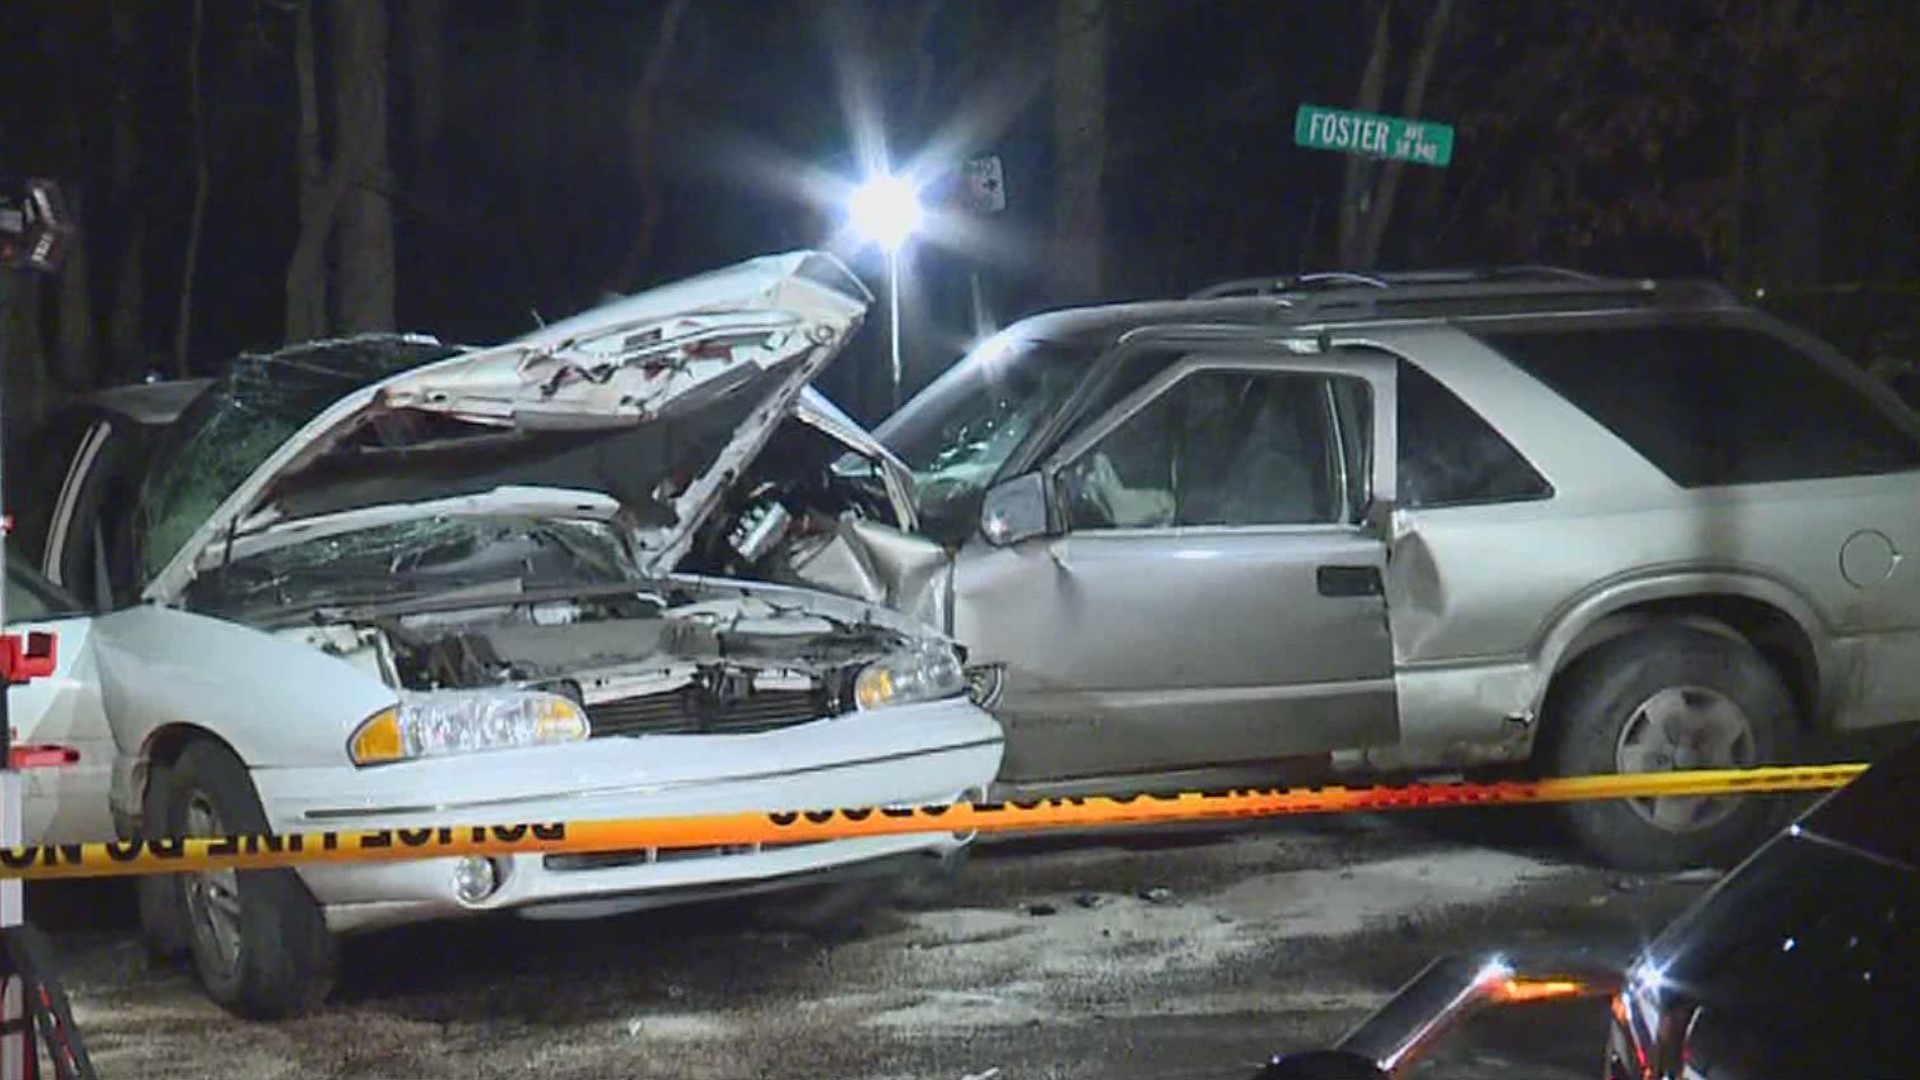 Two men were hurt in a crash Wednesday night near White Haven.